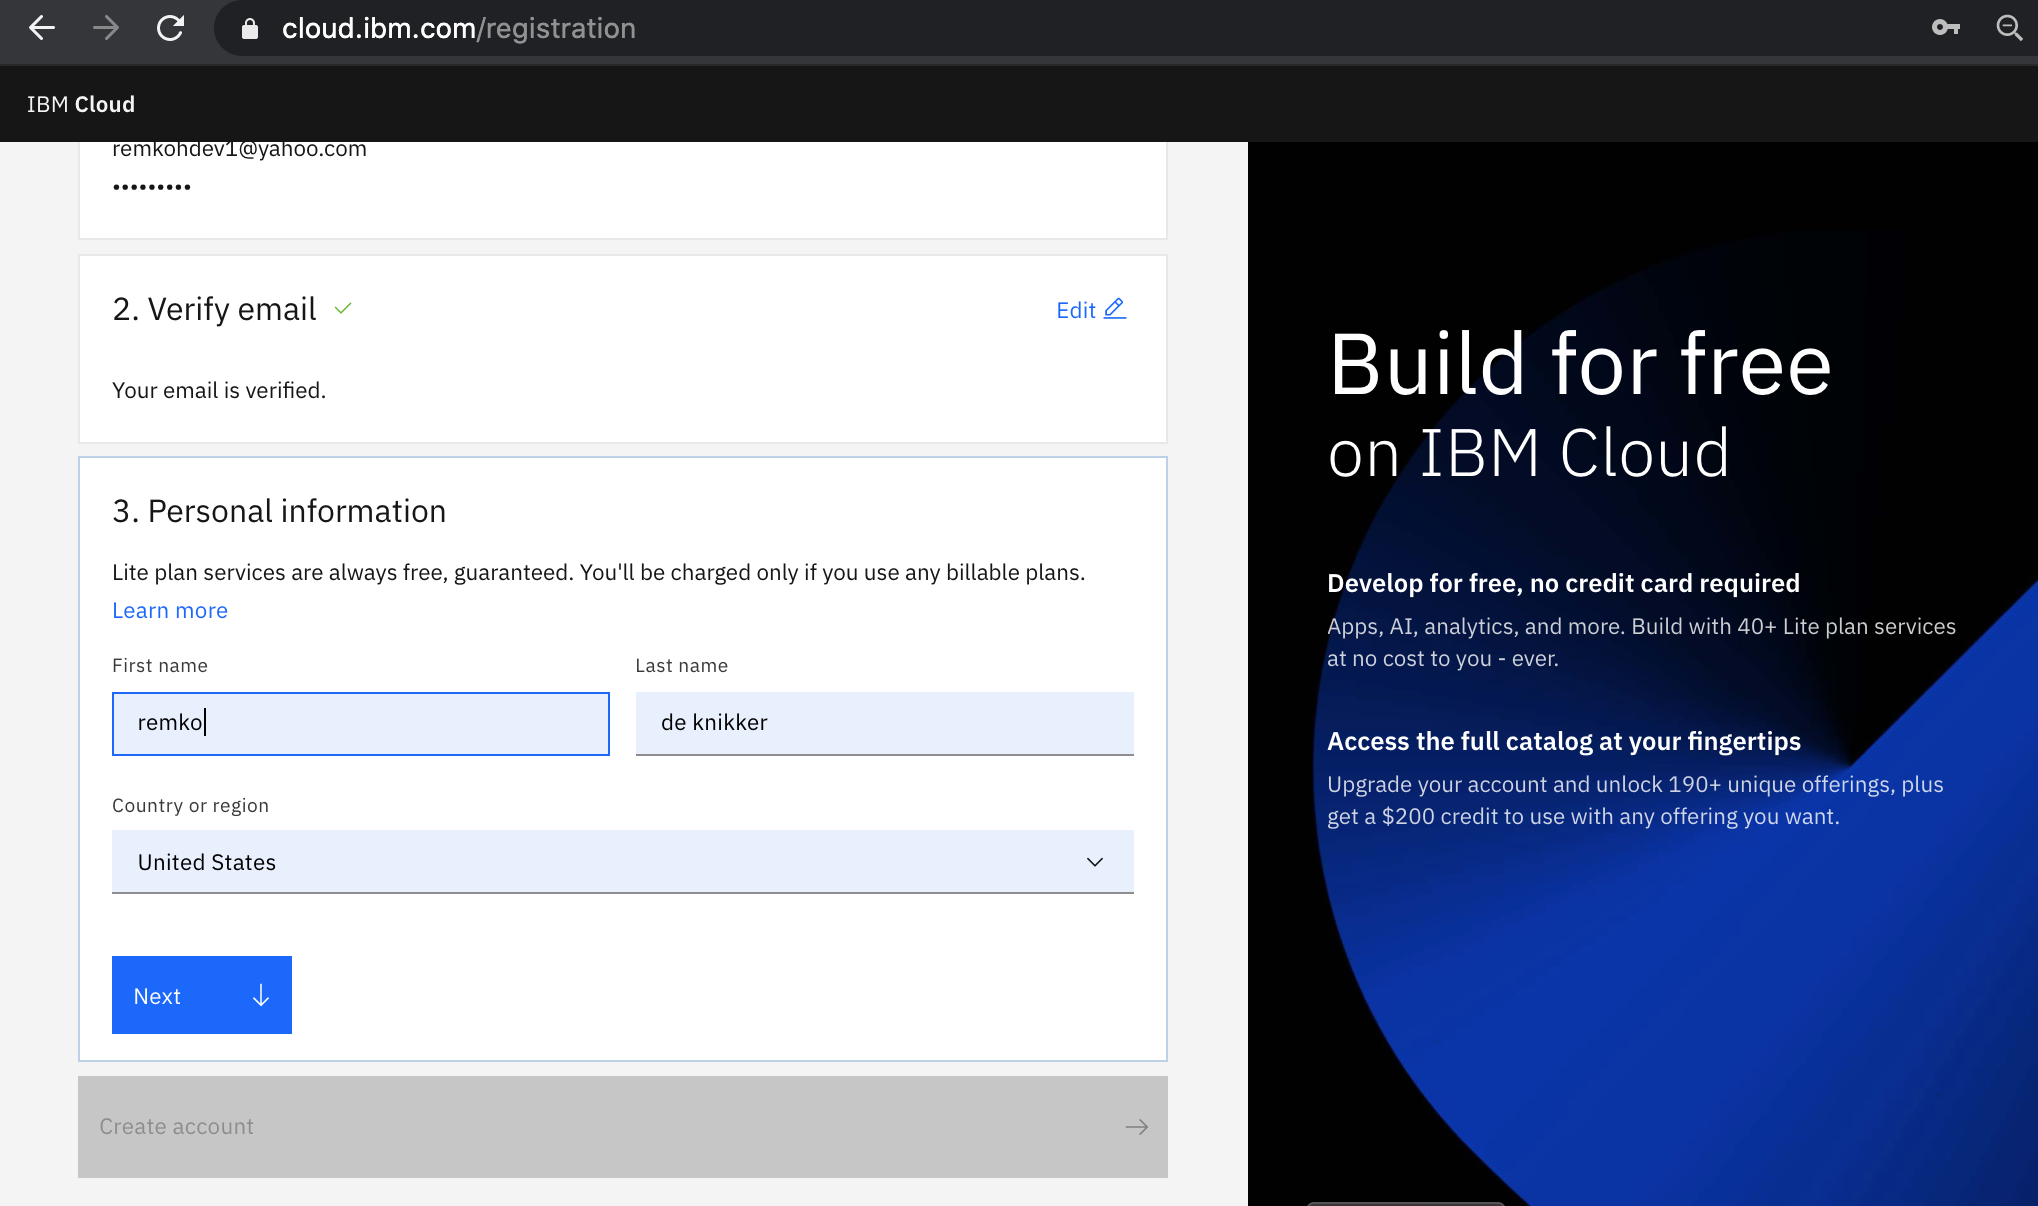 IBM Cloud Registration